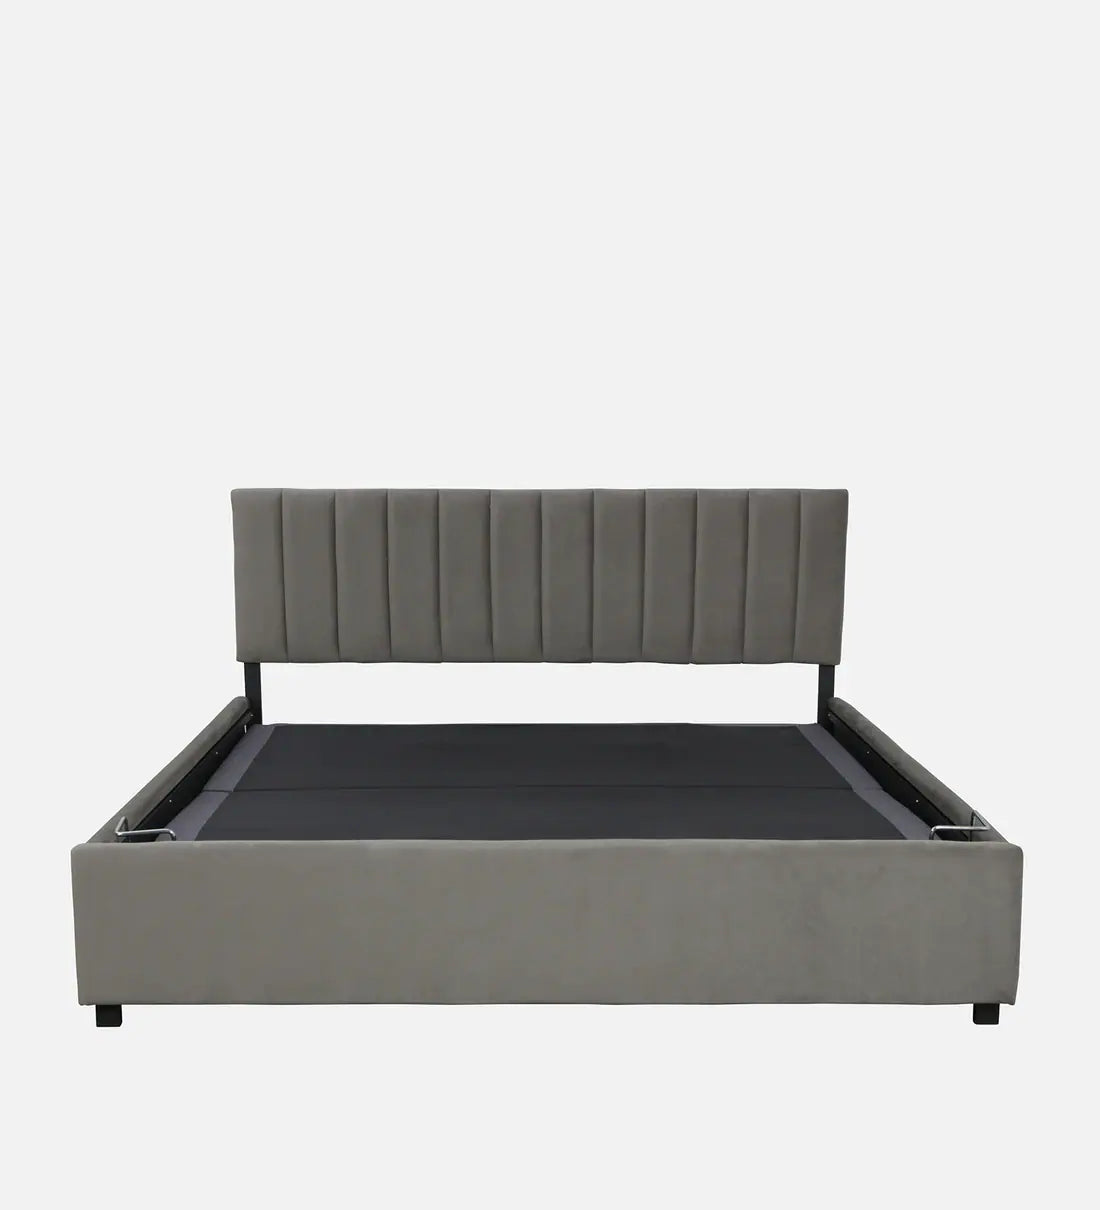 Aliba King Size Smart Bed in Italia Grey Colour With Remote